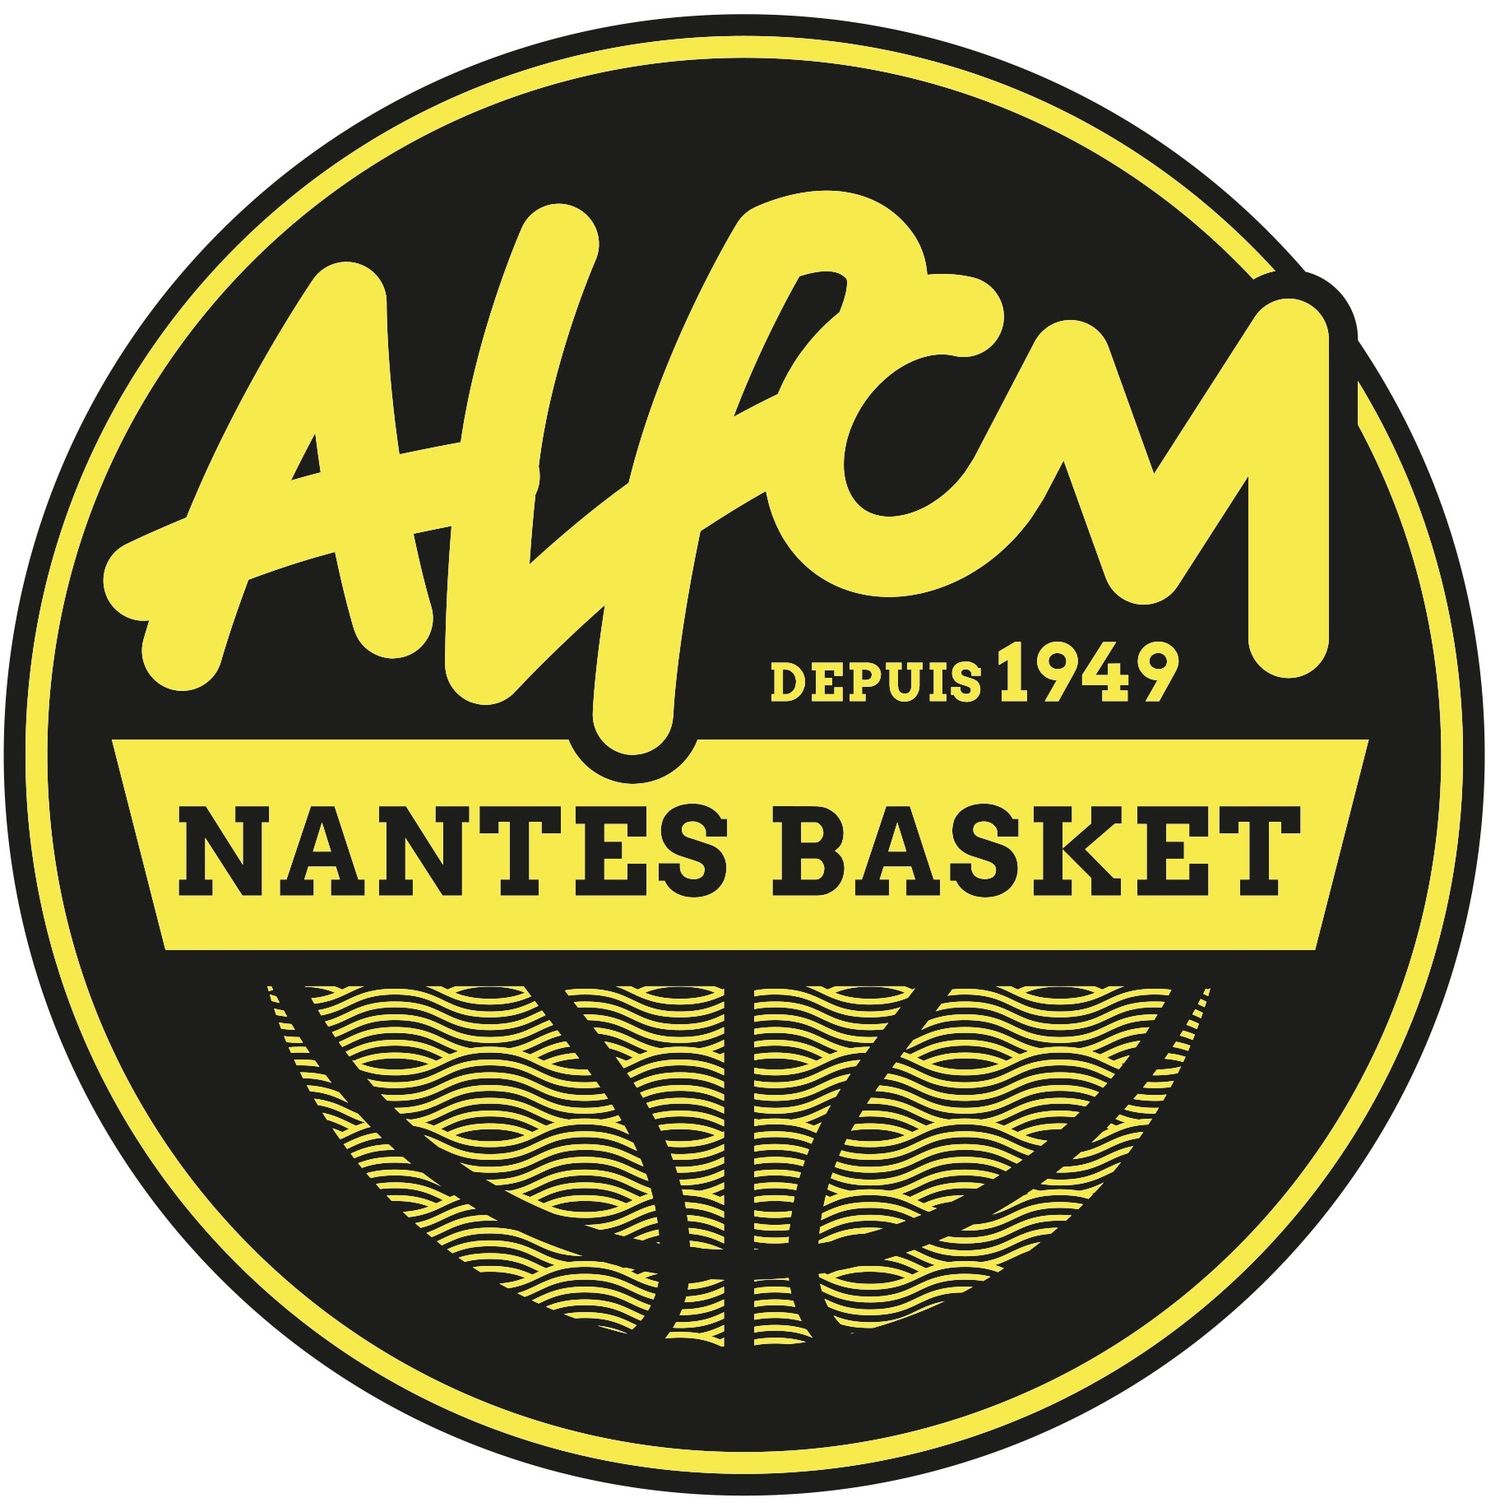 ALPCM Nantes Basket (ALPCM)